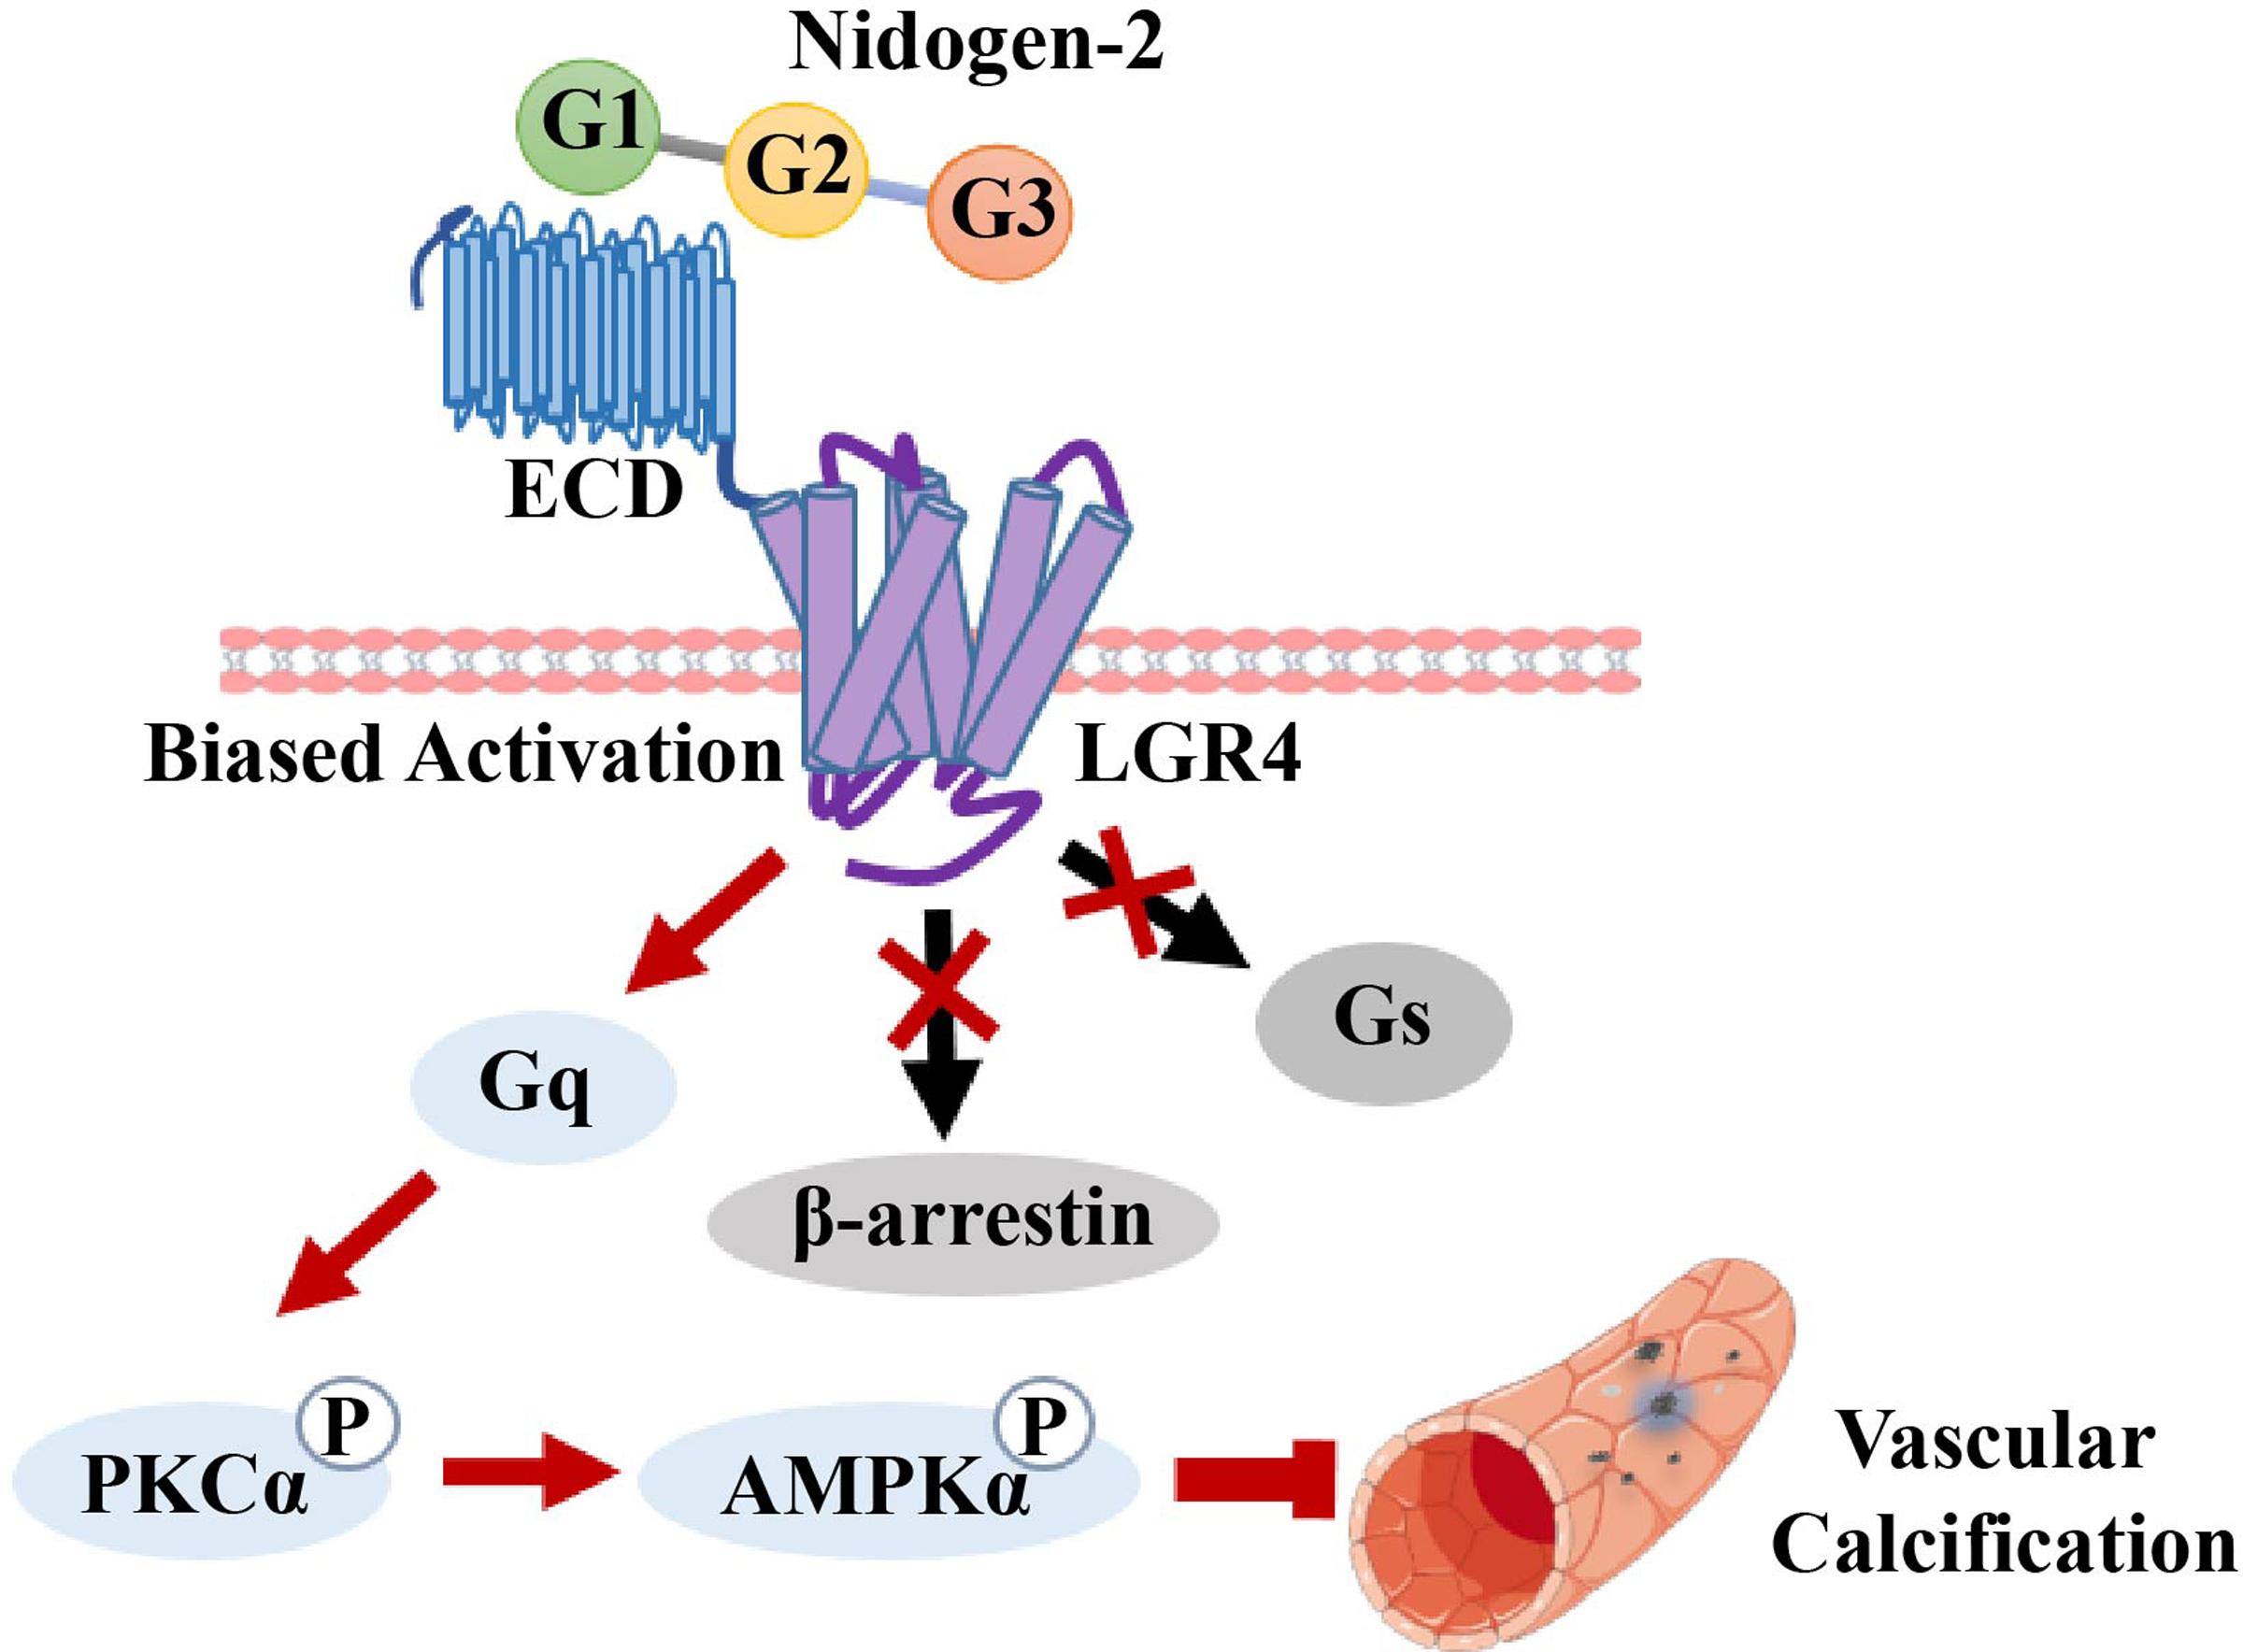 Nidogen-2 is a Novel Endogenous Ligand of LGR4 to Inhibit Vascular Calcification